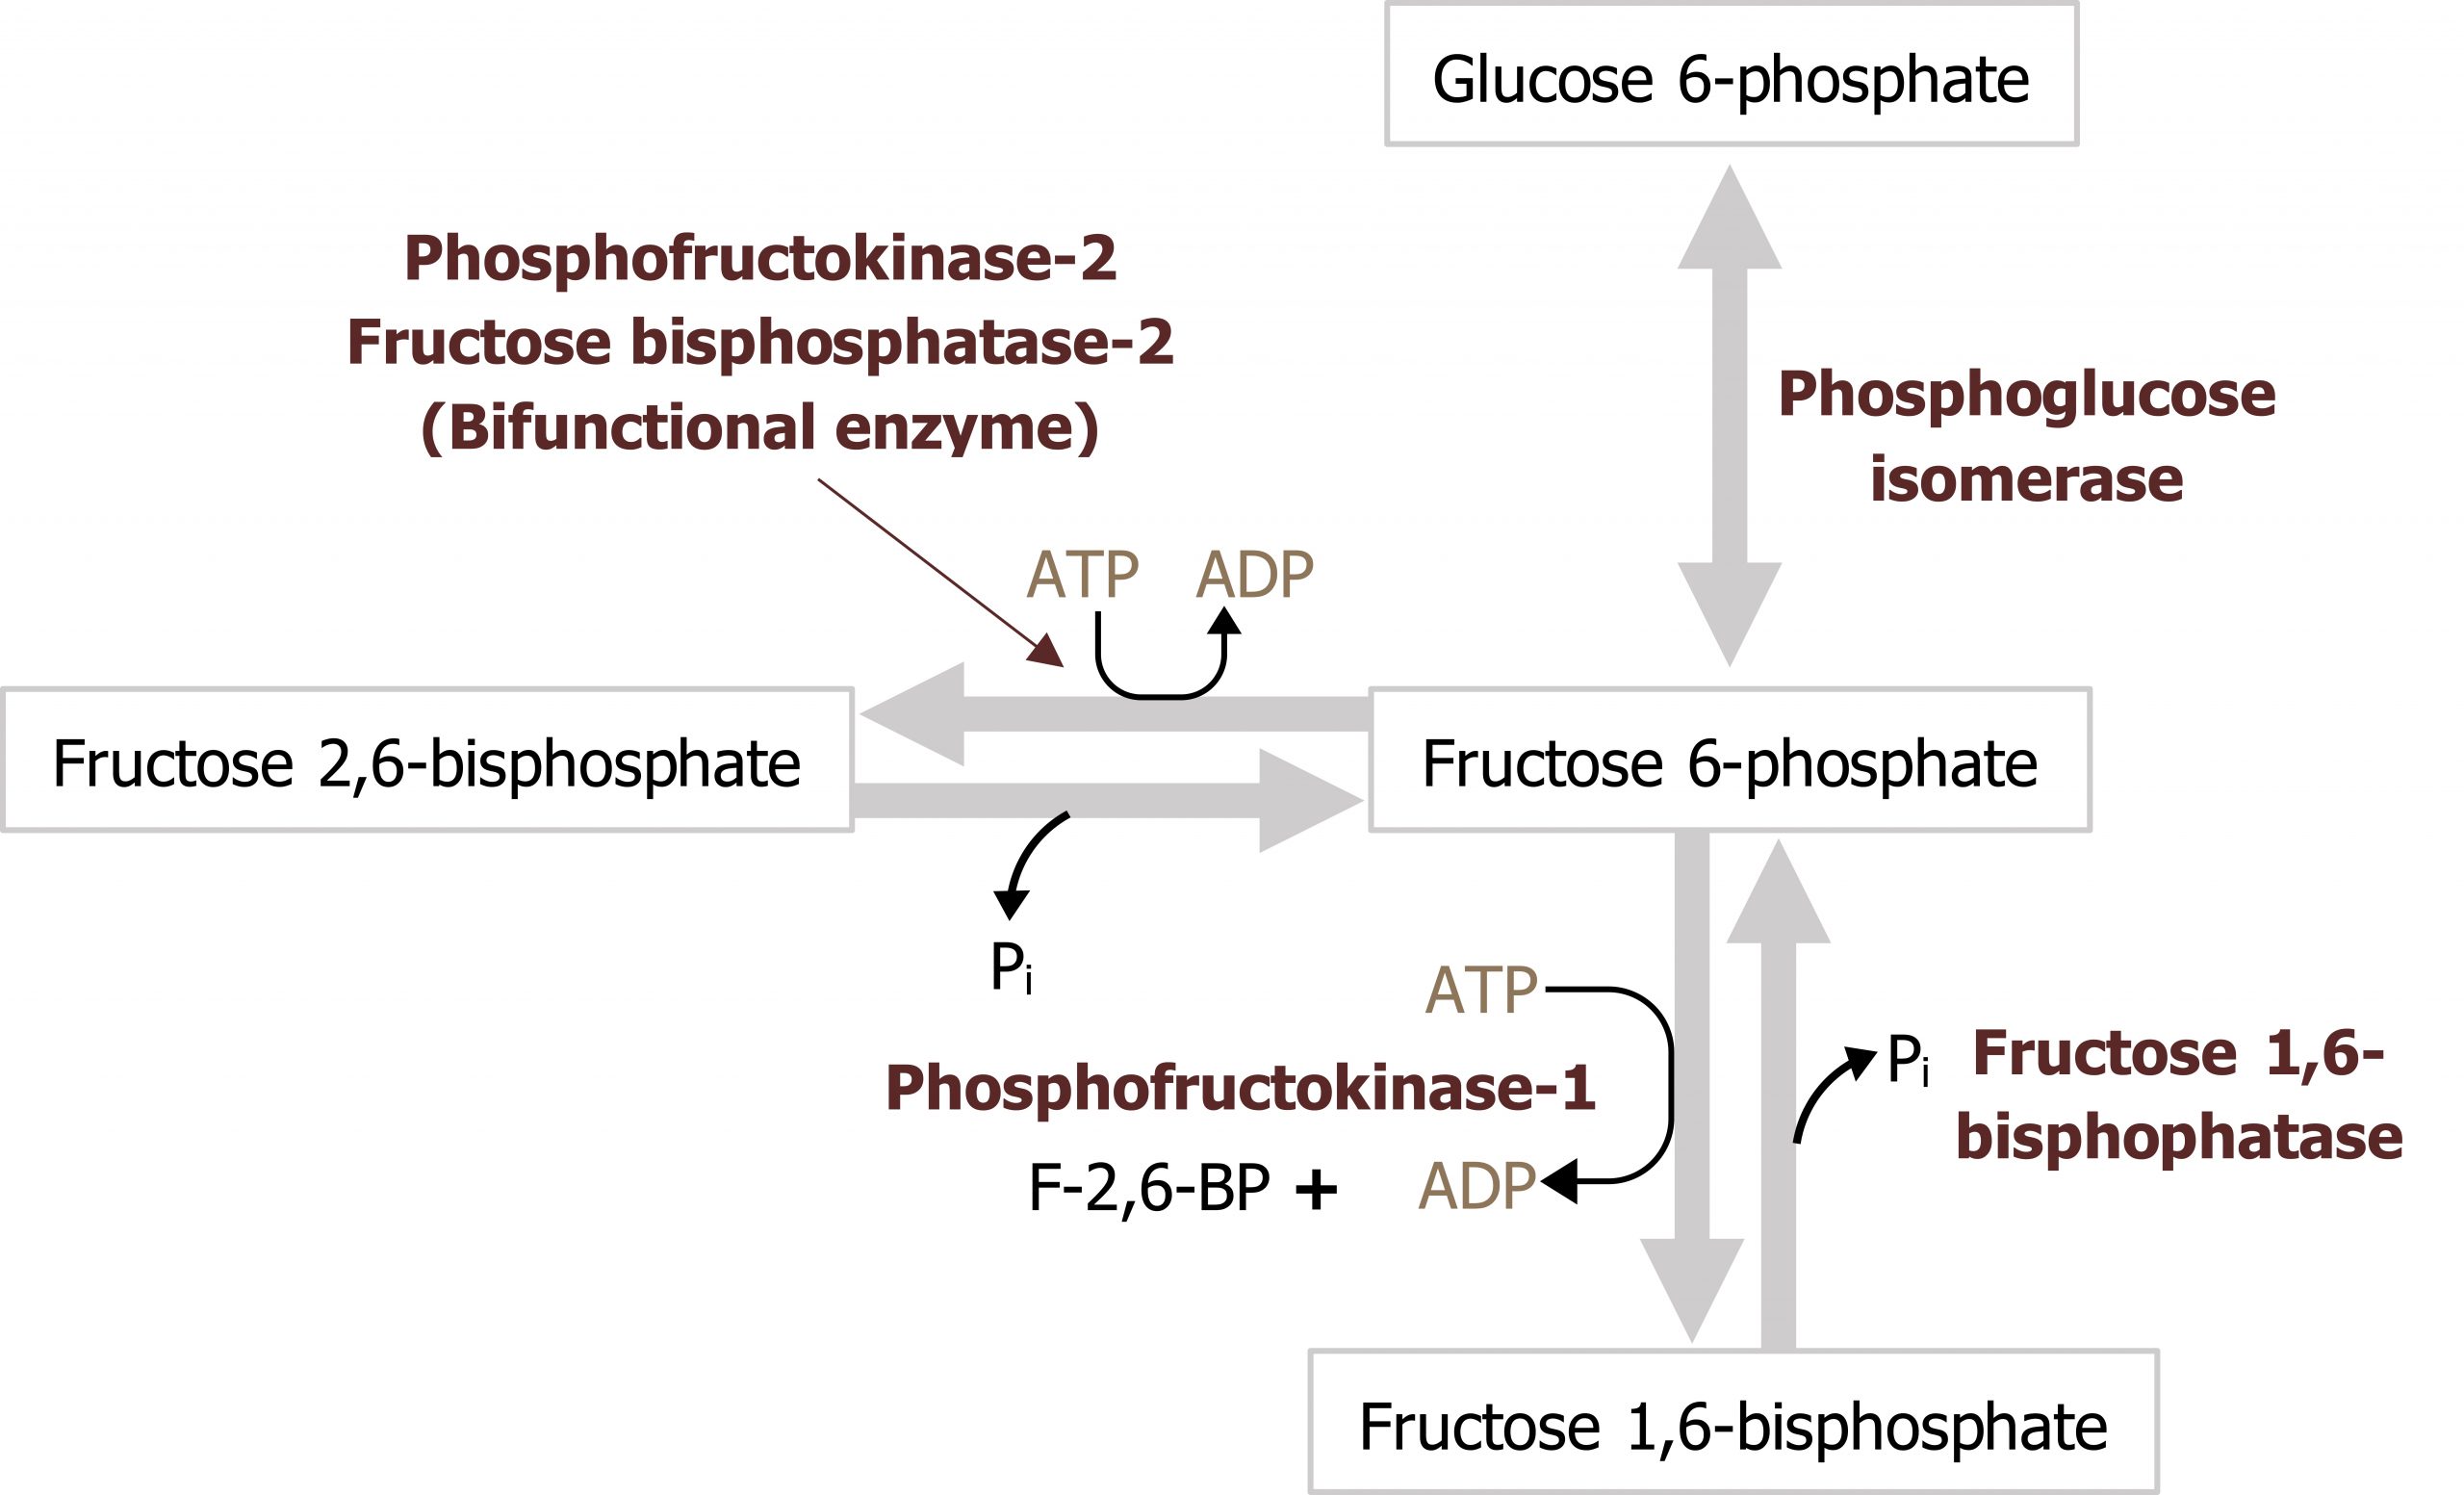 Glucose 6-phosphate bidirectional arrow with enzyme phosphoglucose isomerase to fructose 6-phosphate bidirectional arrow fructose 1,6-bisphosphate. Fructose 6-phosphate forward arrow with enzyme phosphofructokinase-1 and ATP arrow ADP to fructose 1,6-bisphosphate. F-2, 6-BP +. Fructose 1,6-bisphosphate backwards arrow with enzyme fructose 1,6-bisphosphate and loss of Pi to fructose 6-phosphate. Fructose 6-phosphate forward arrow with enzyme phosphofructokinase-2 fructose bisphosphatase-2 (bifunctional enzyme) and ATP arrow ADP to fructose 2,6-bisphosphate. Fructose 2,6-bisphosphate backwards arrow with loss of Pi to fructose 6-phosphate.